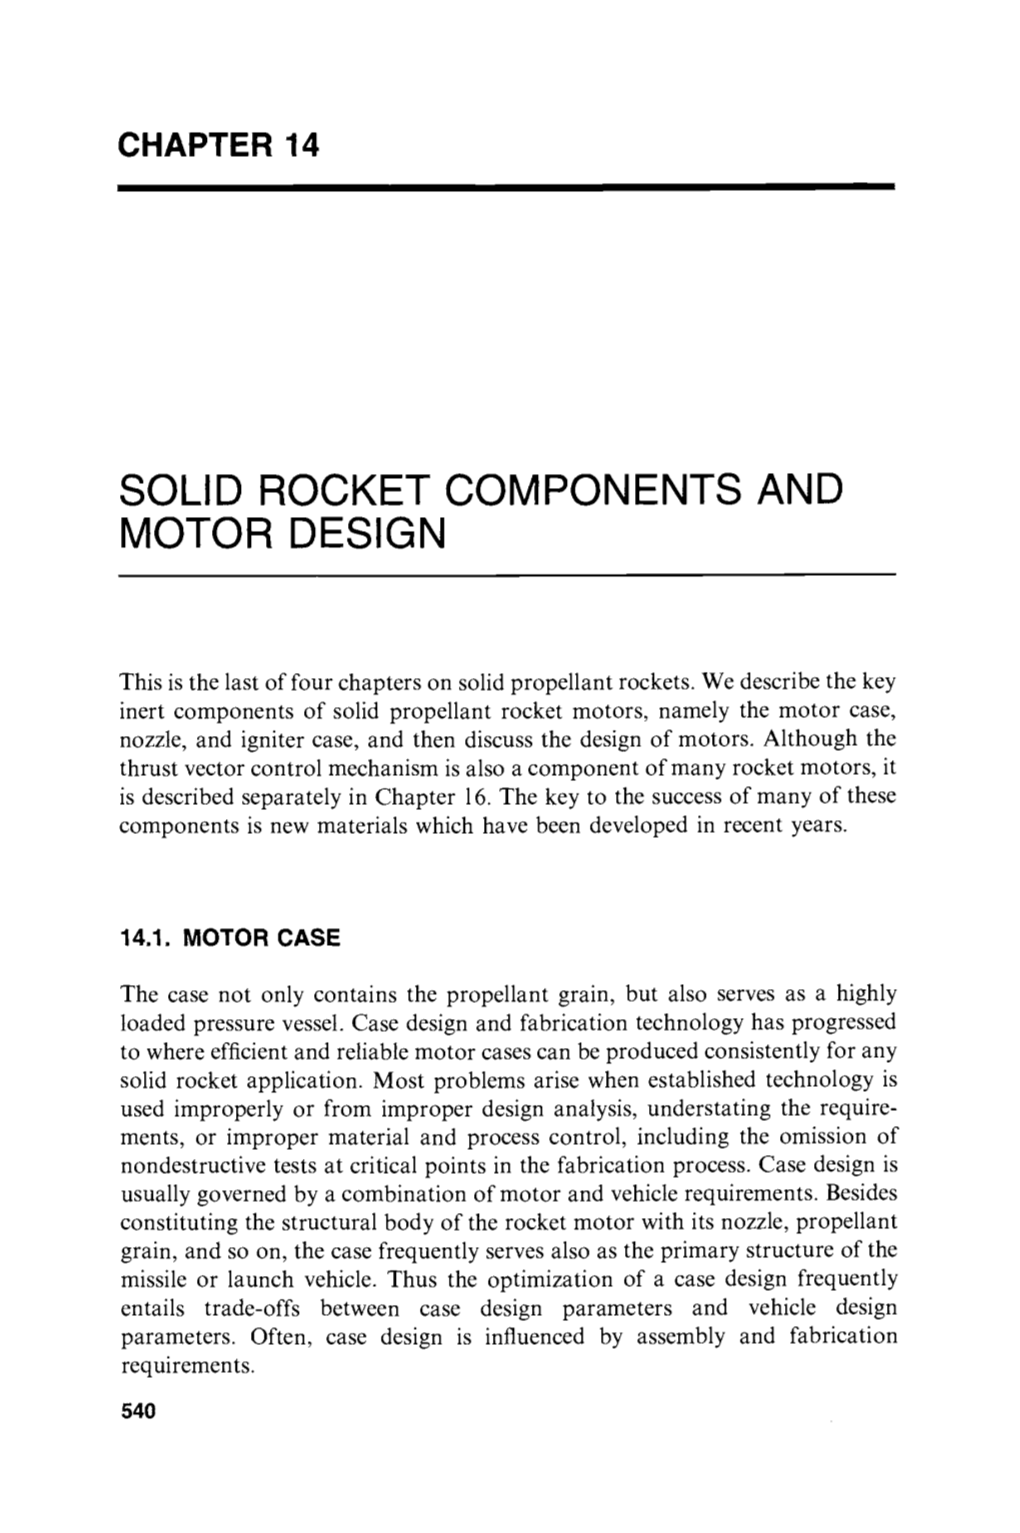 Solid Rocket Components and Motor Design